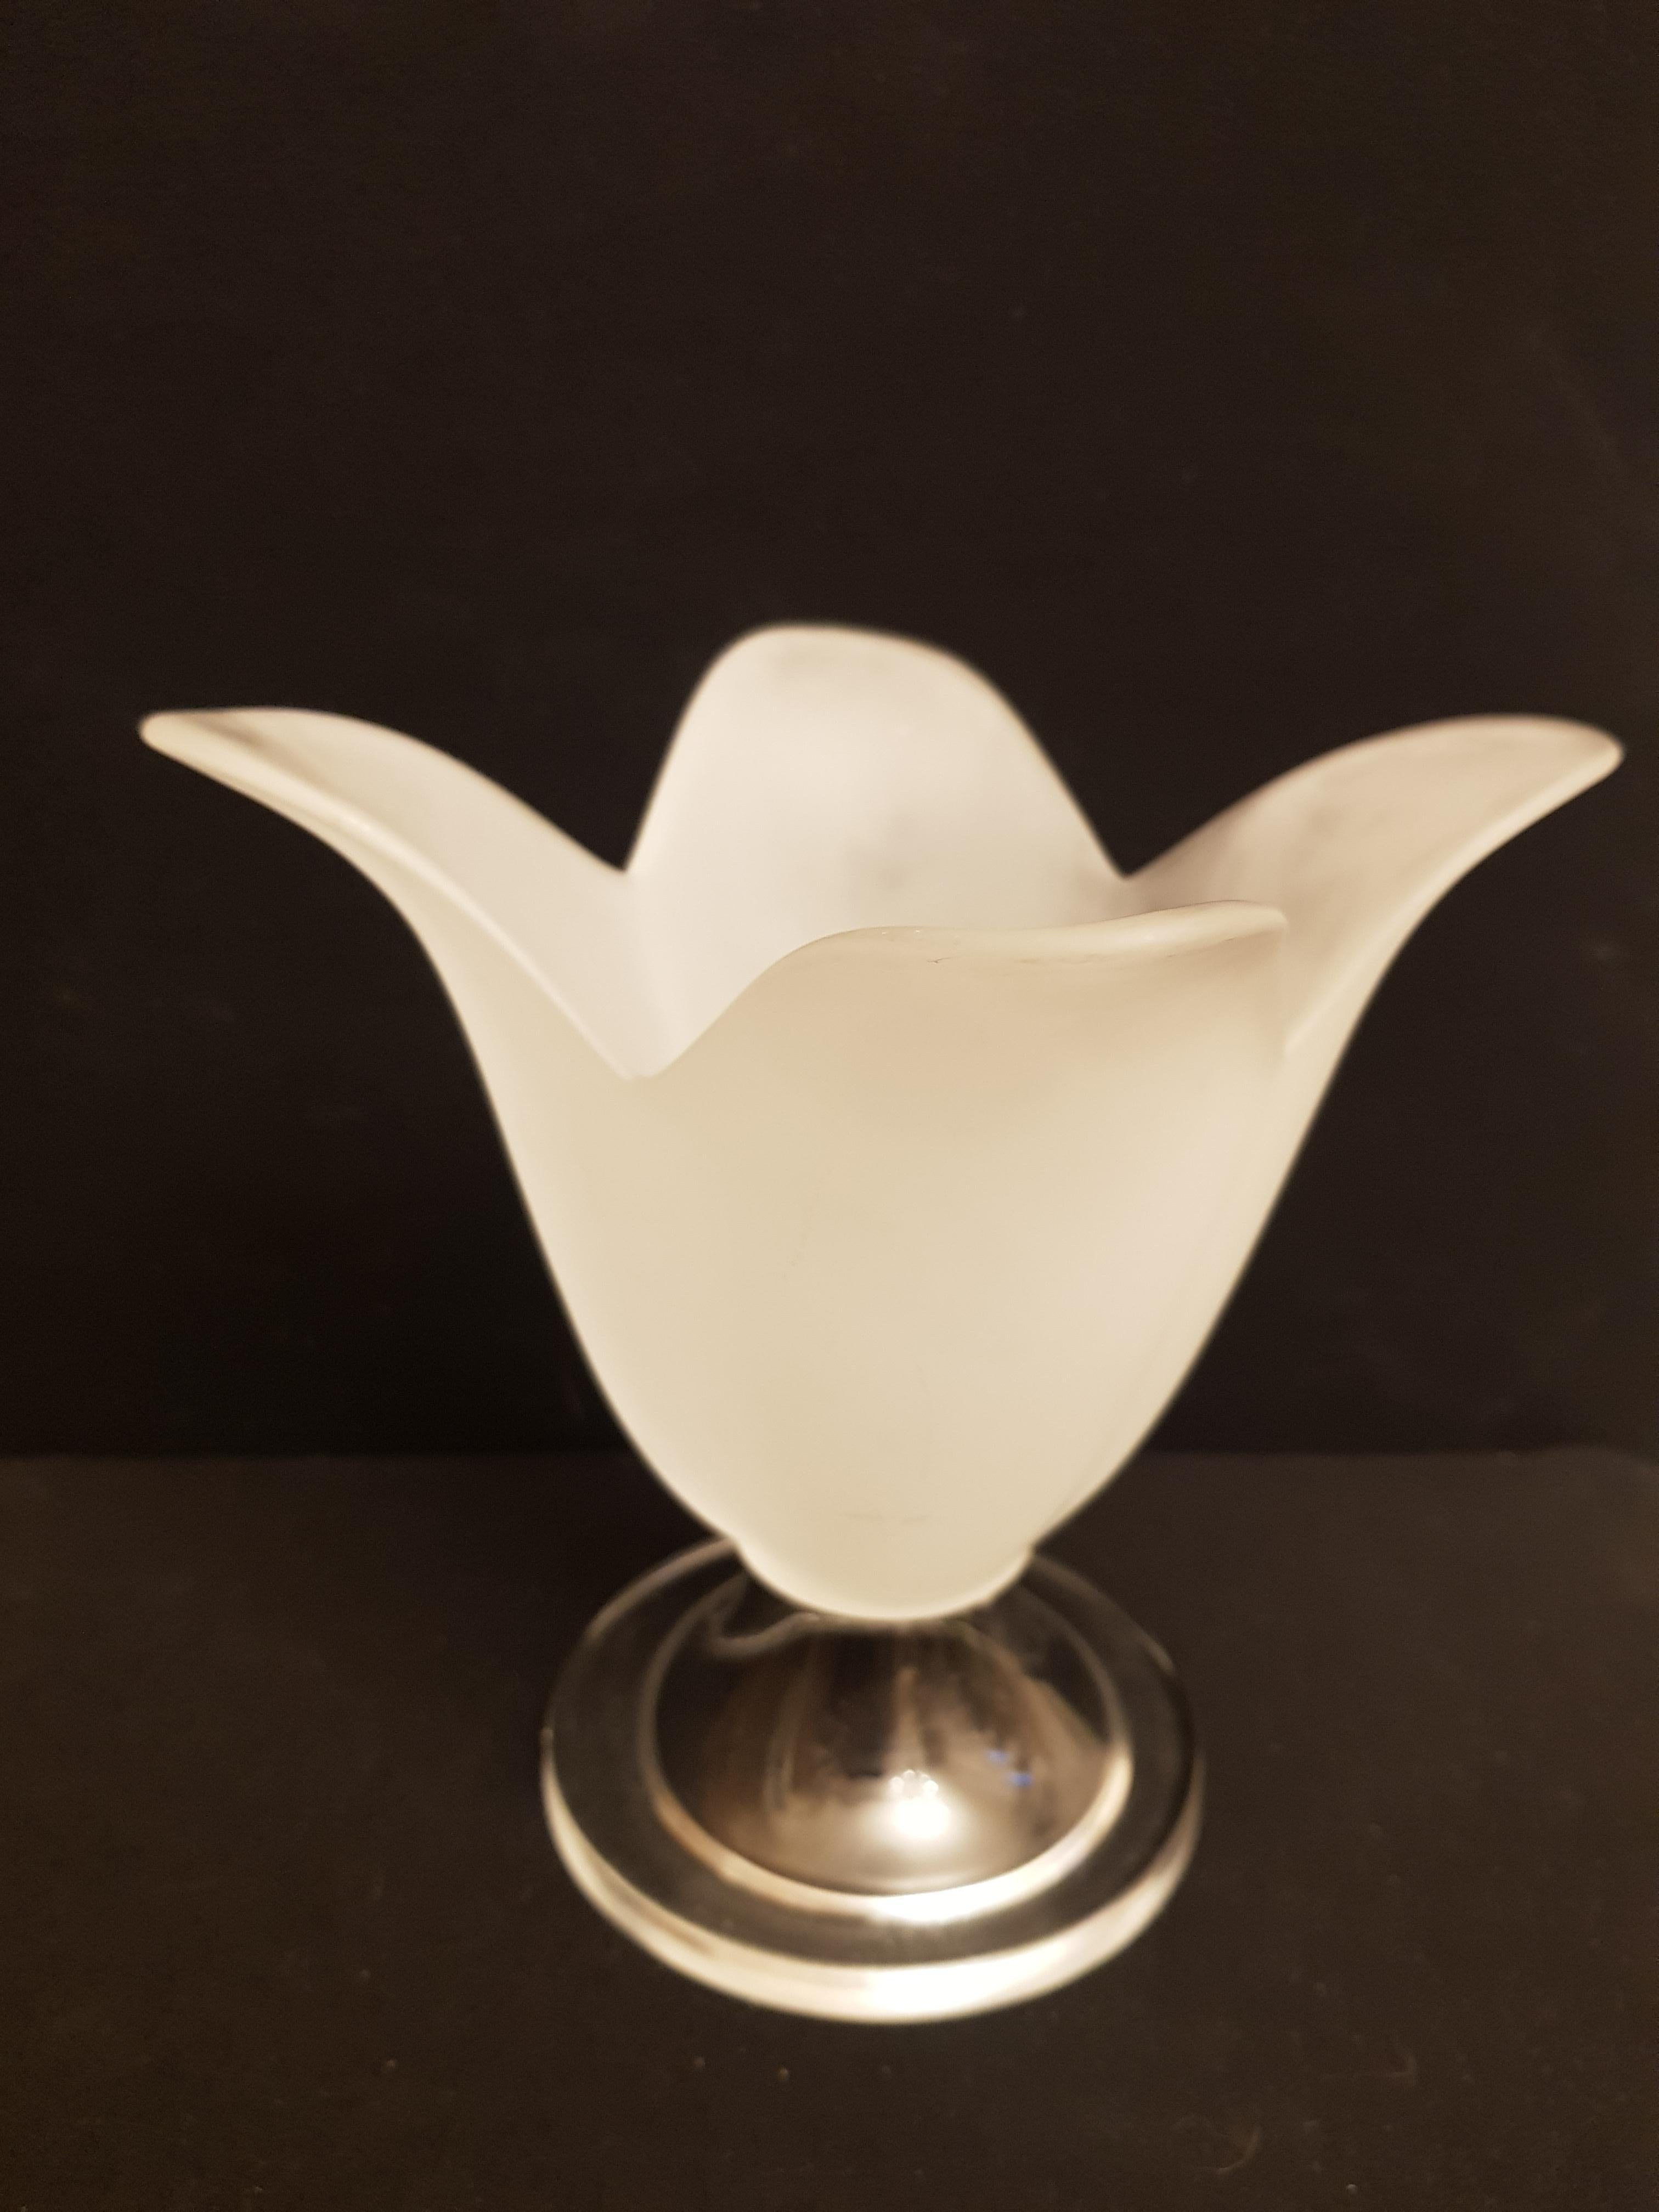 Beautiful antique Art Deco glass flower vase brilliant condition.